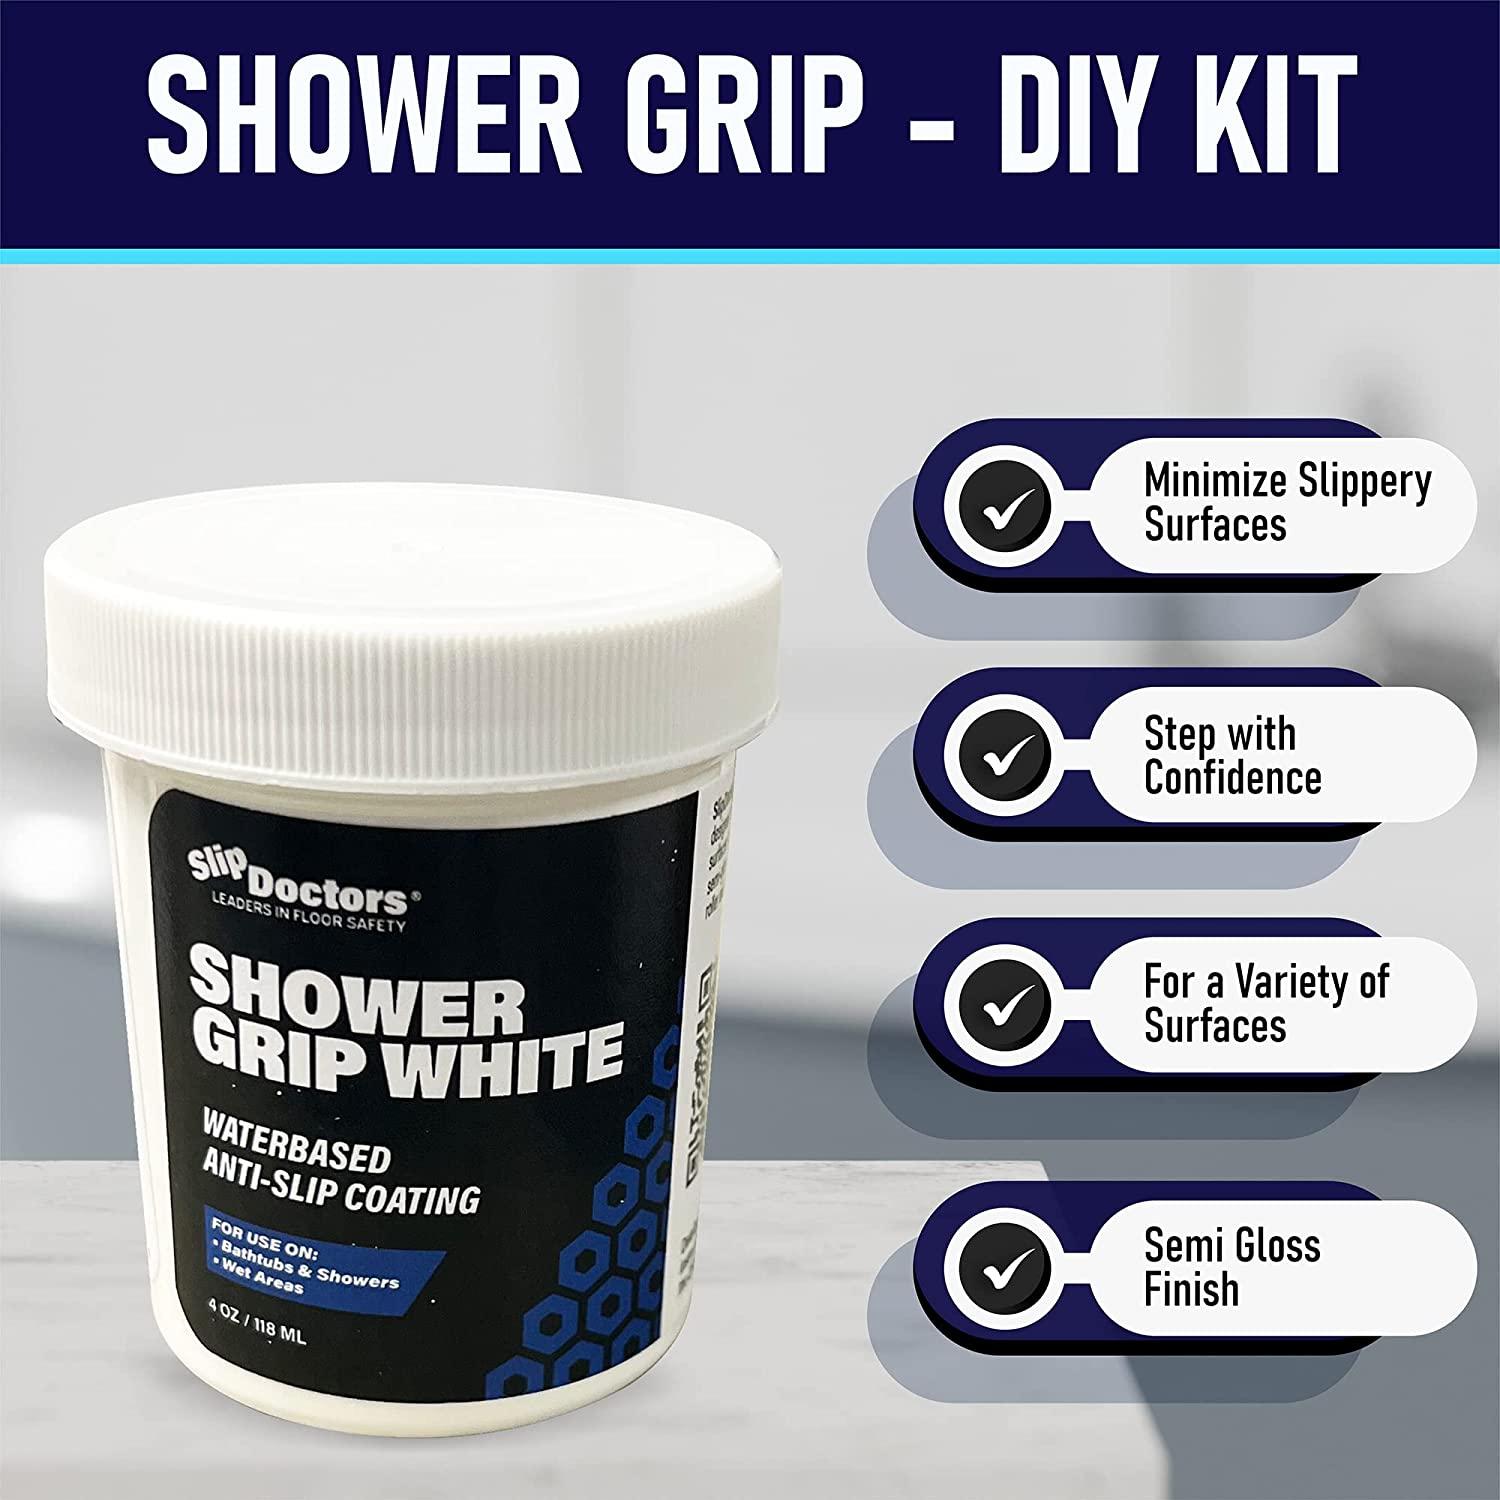 Anti-Slip Bathtub and Shower Coating - Tub Grip